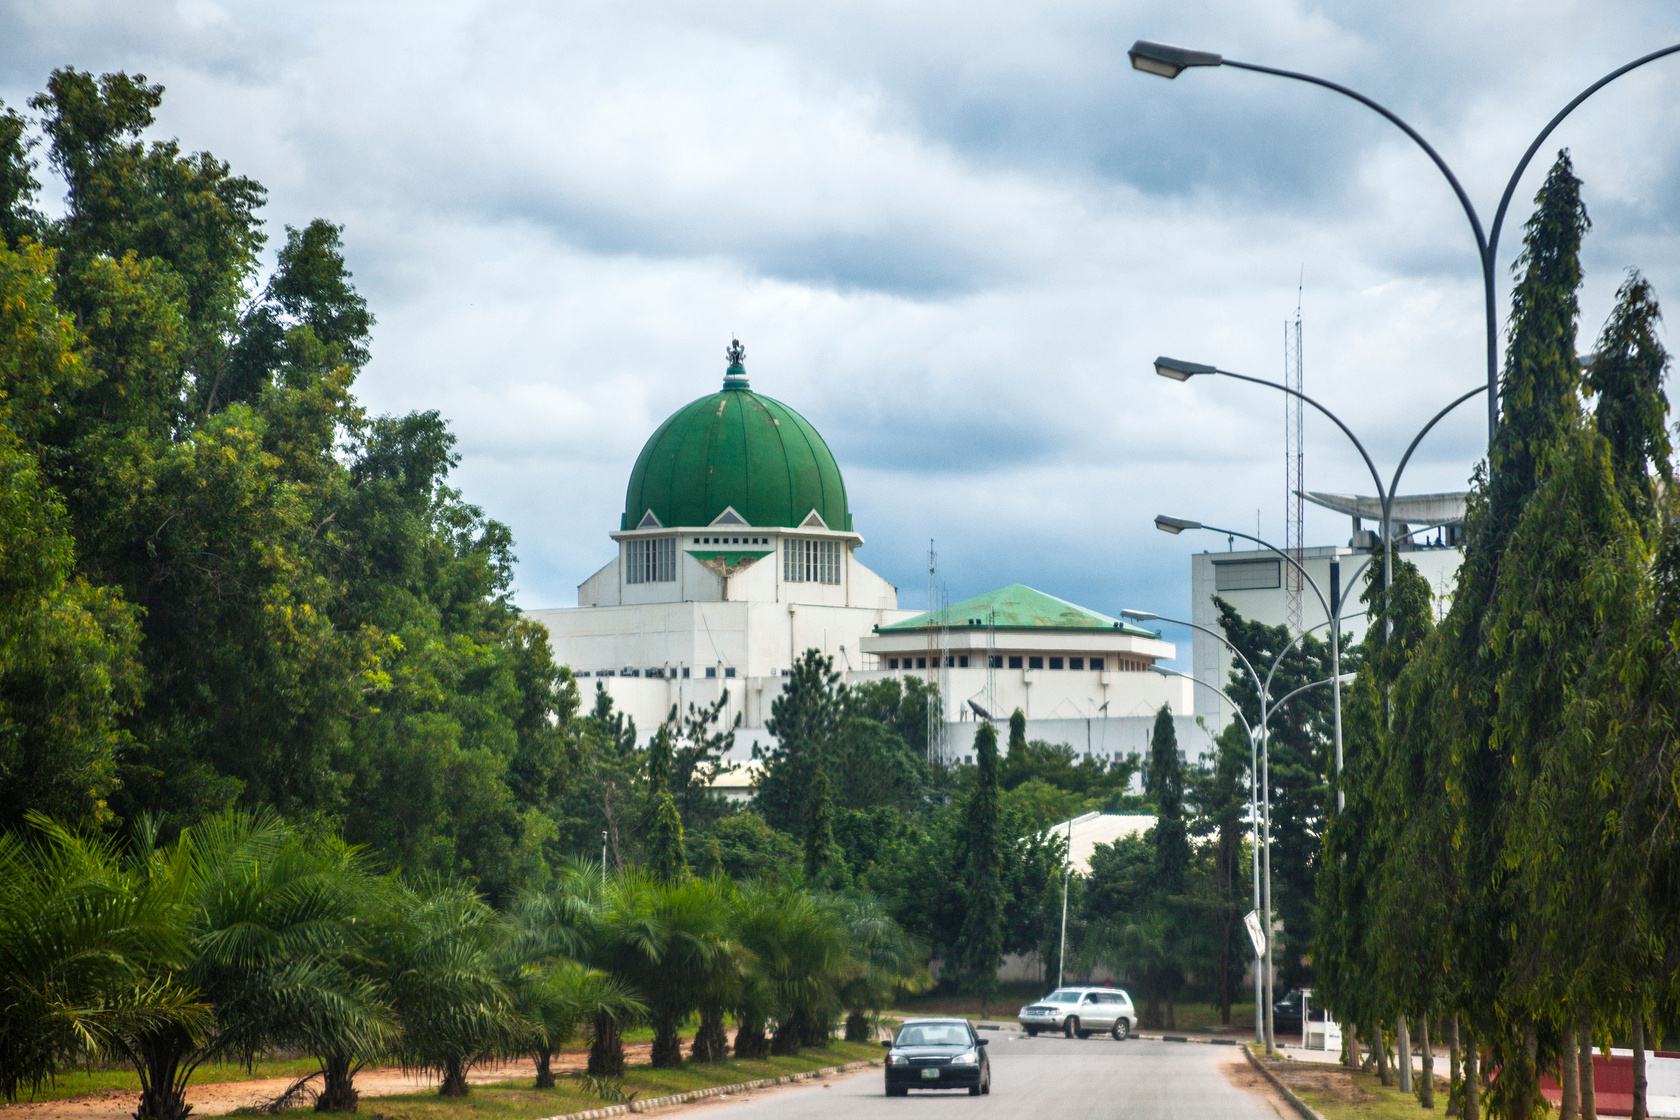 Government buildings in Abuja, Nigeria.